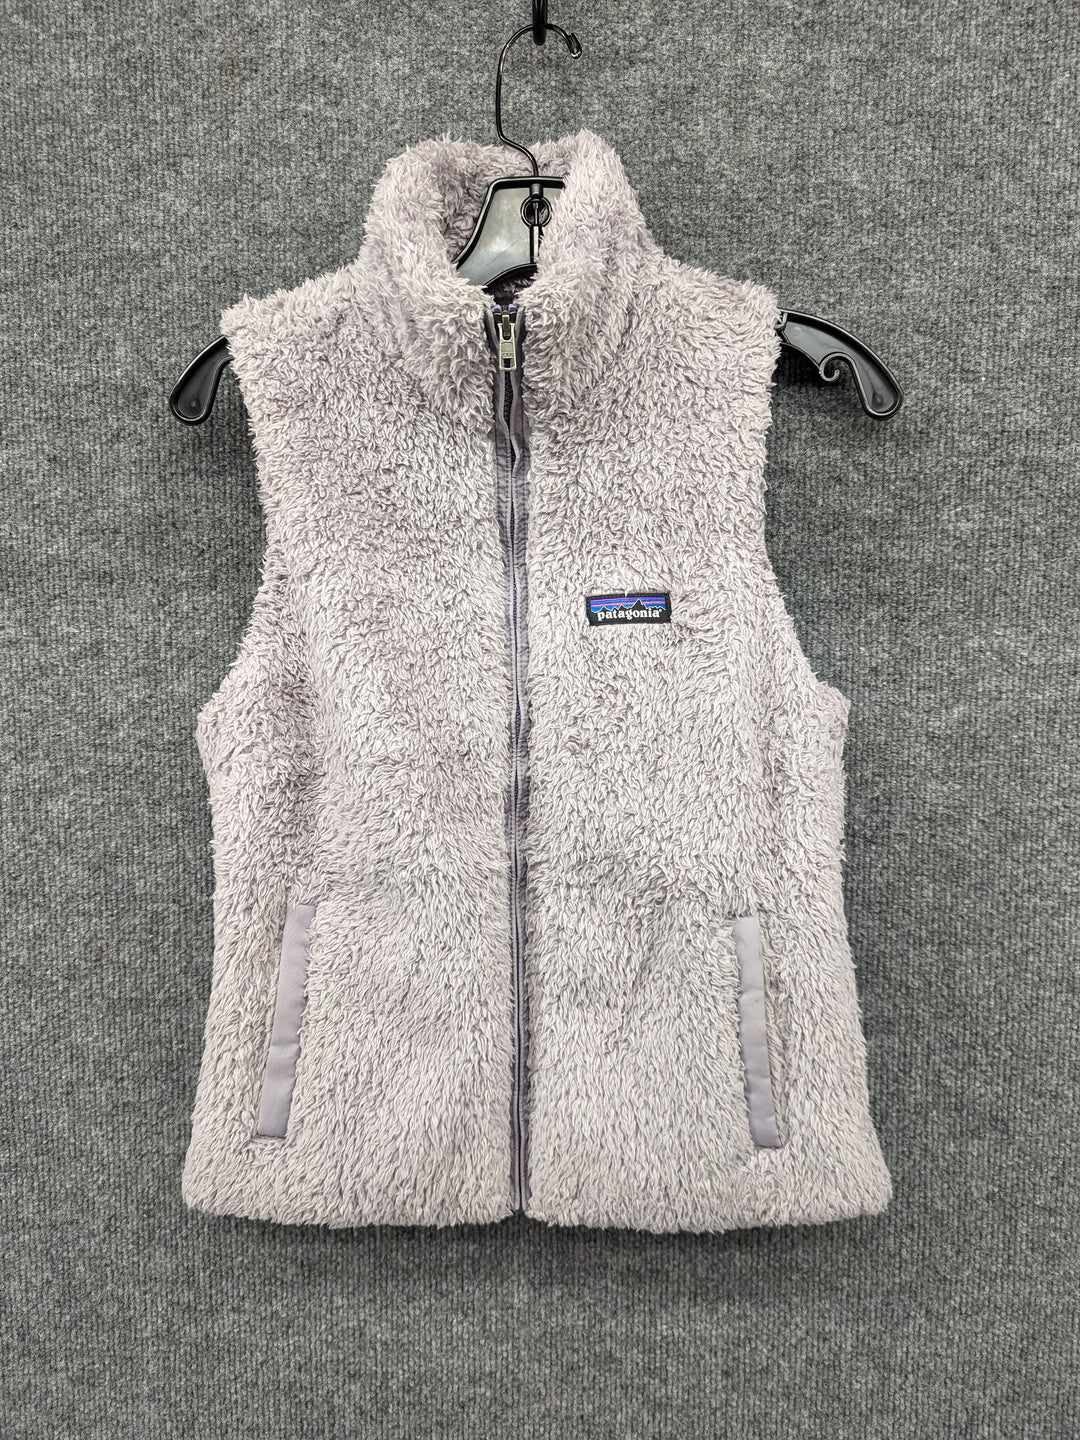 Patagonia Size W Small Women's Fleece Vest